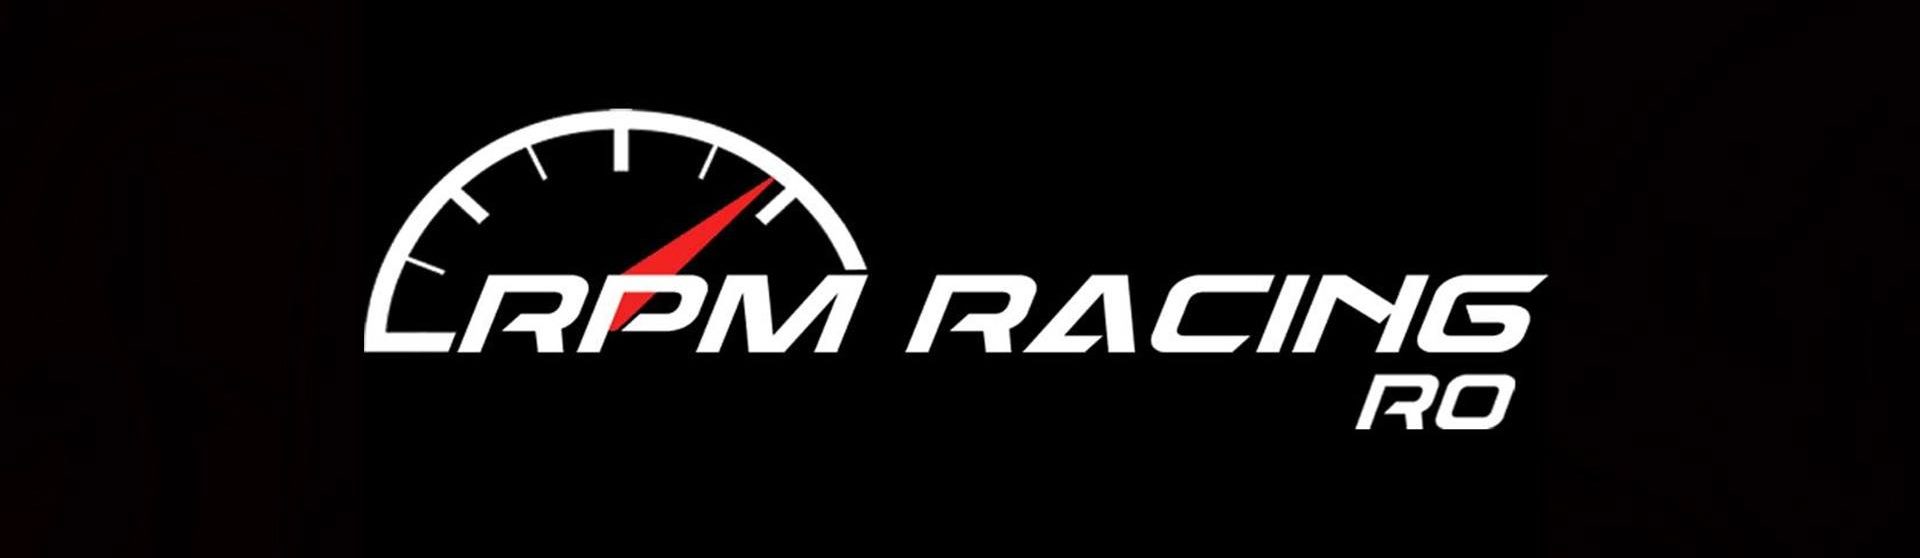 RPM Racing Ro